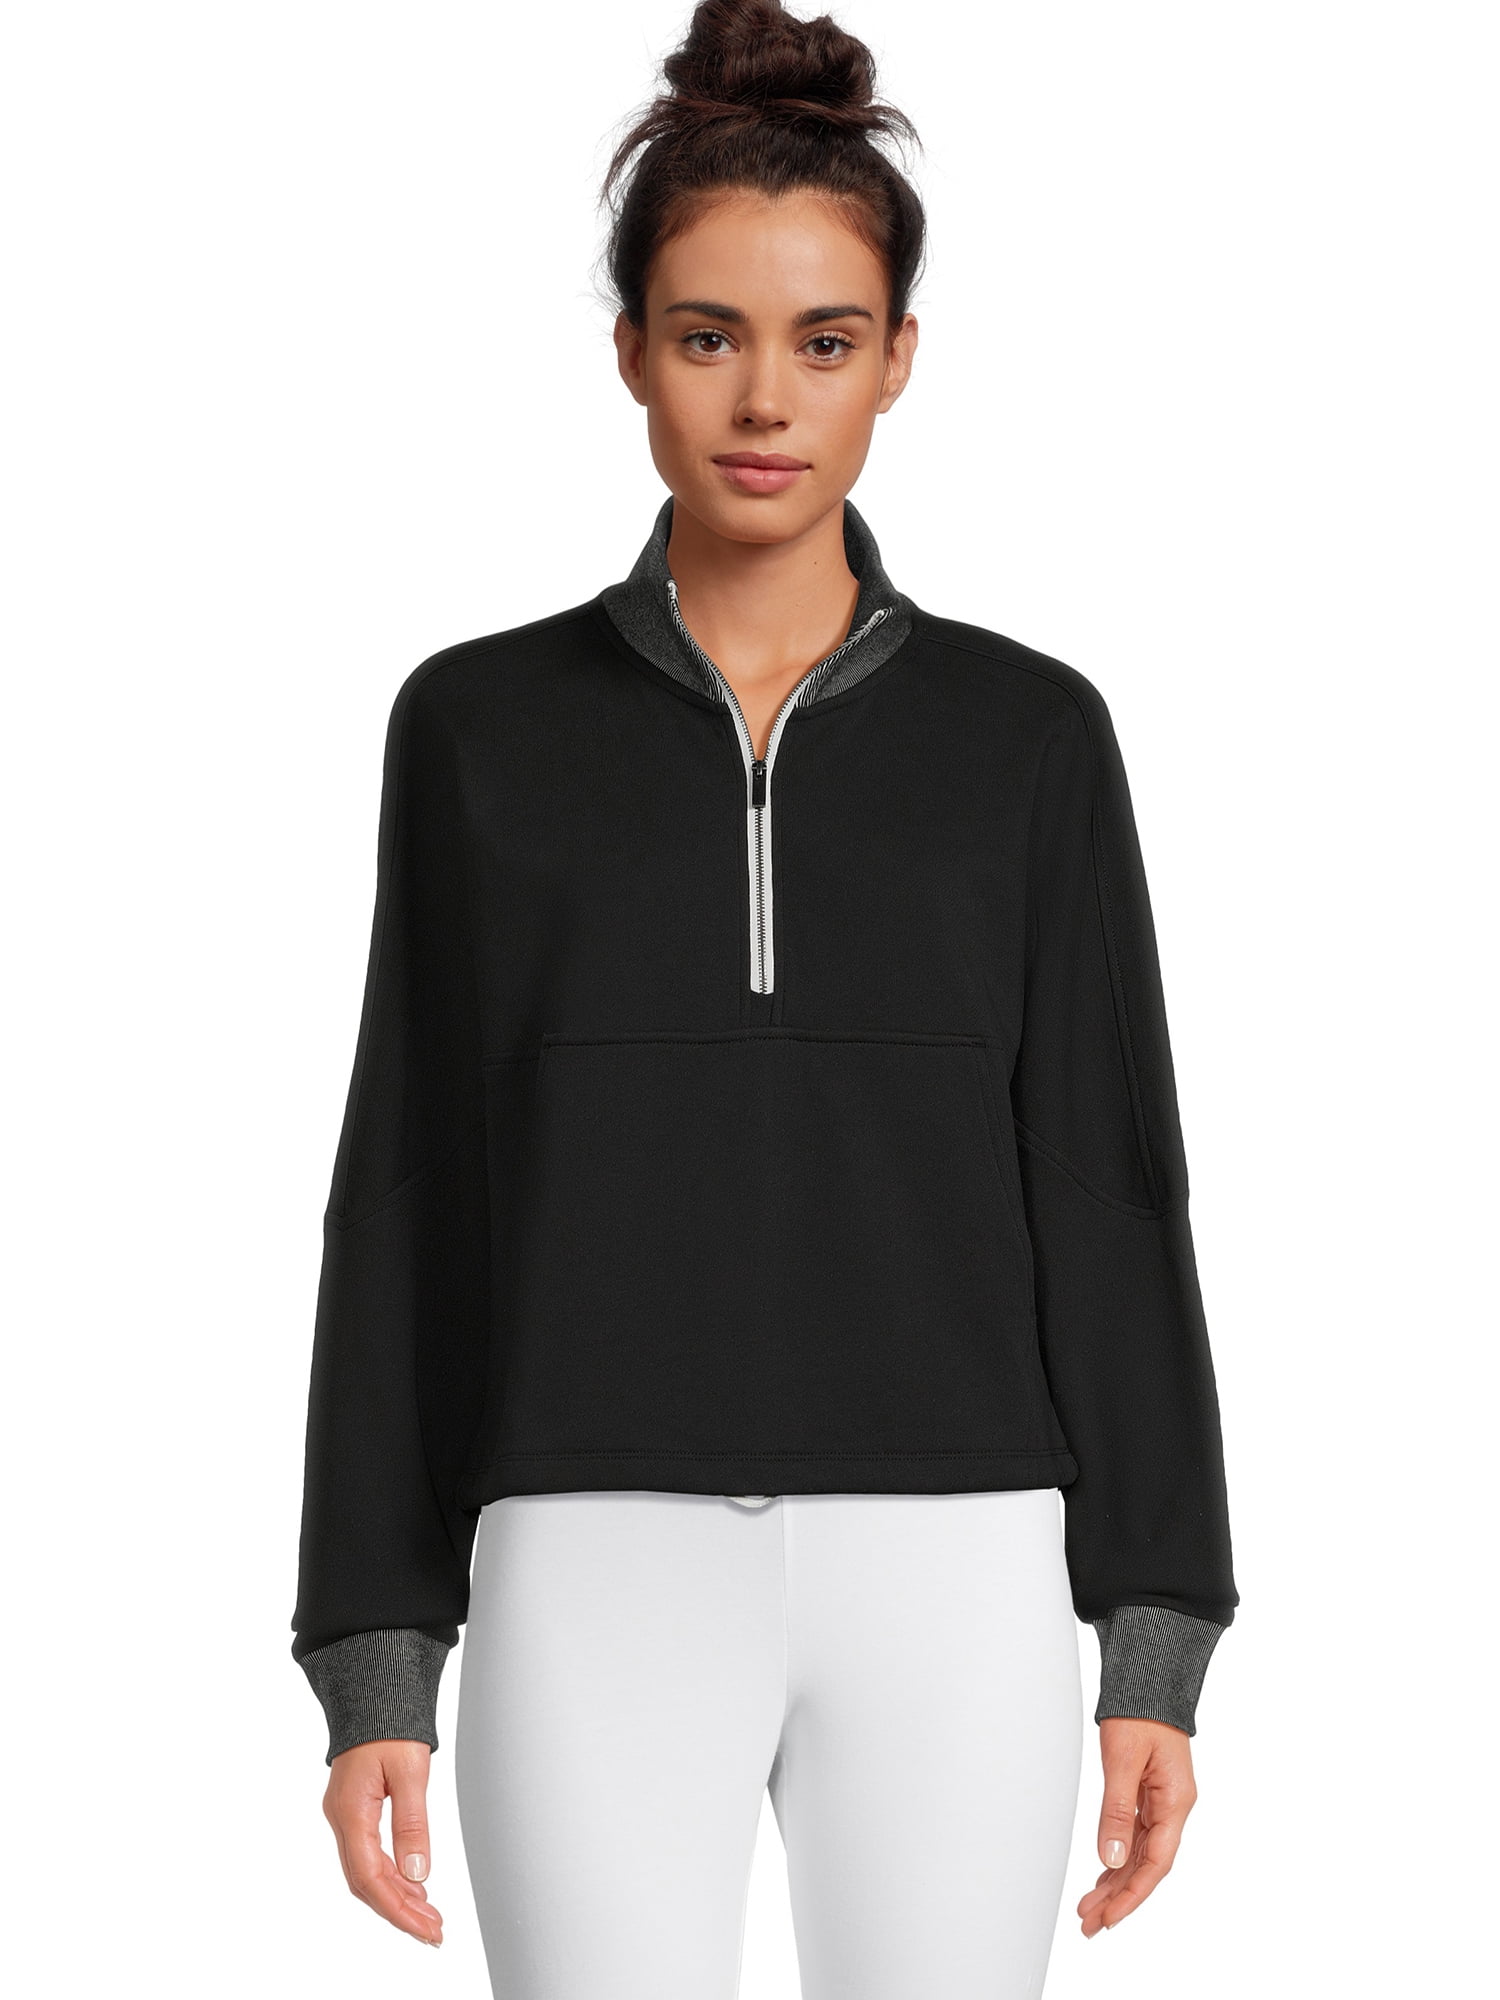 Avia Women’s French Terry Cloth Quarter Zip Tennis Jacket, Sizes XS-3X ...